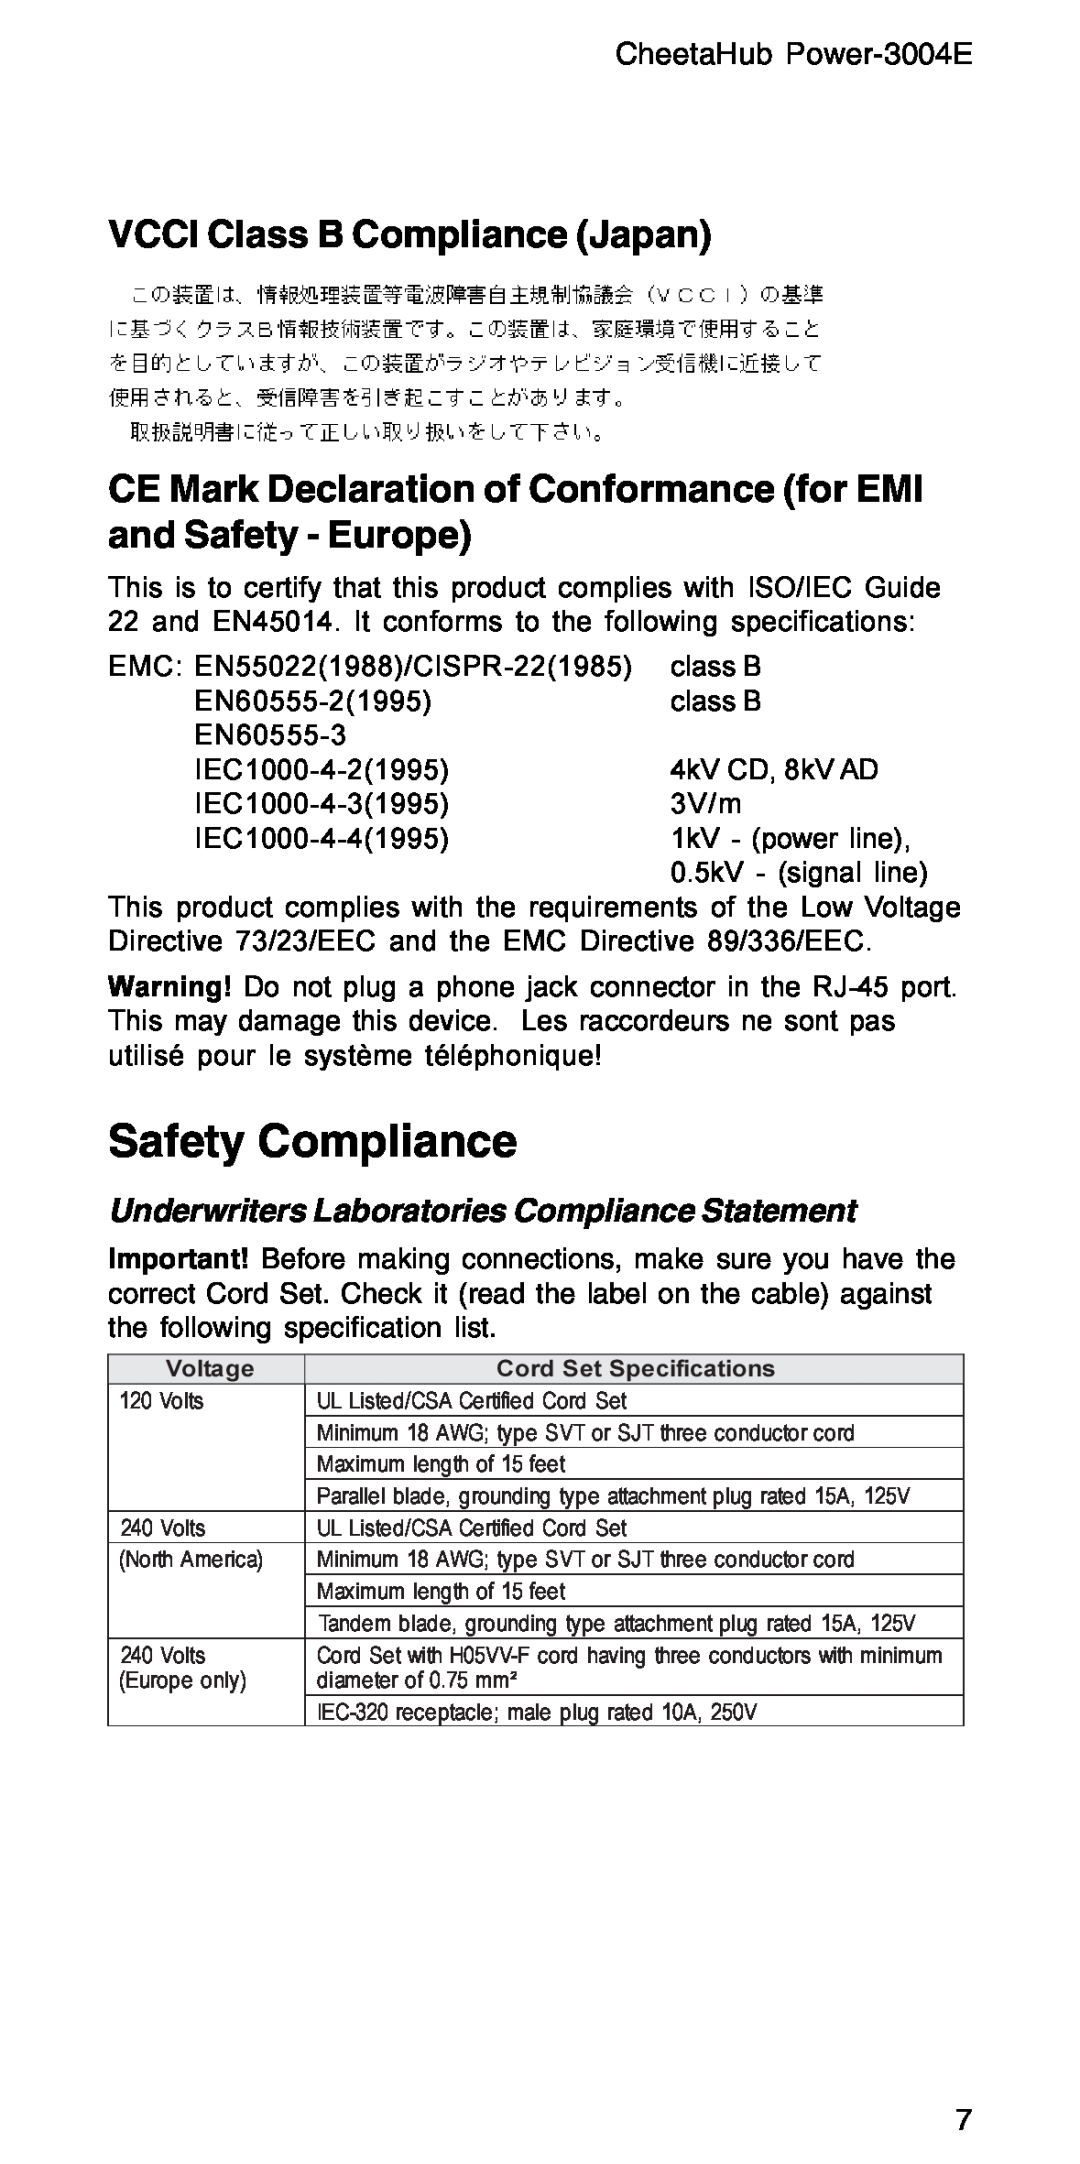 Accton Technology POWER-3004E manual Safety Compliance, VCCI Class B Compliance Japan 